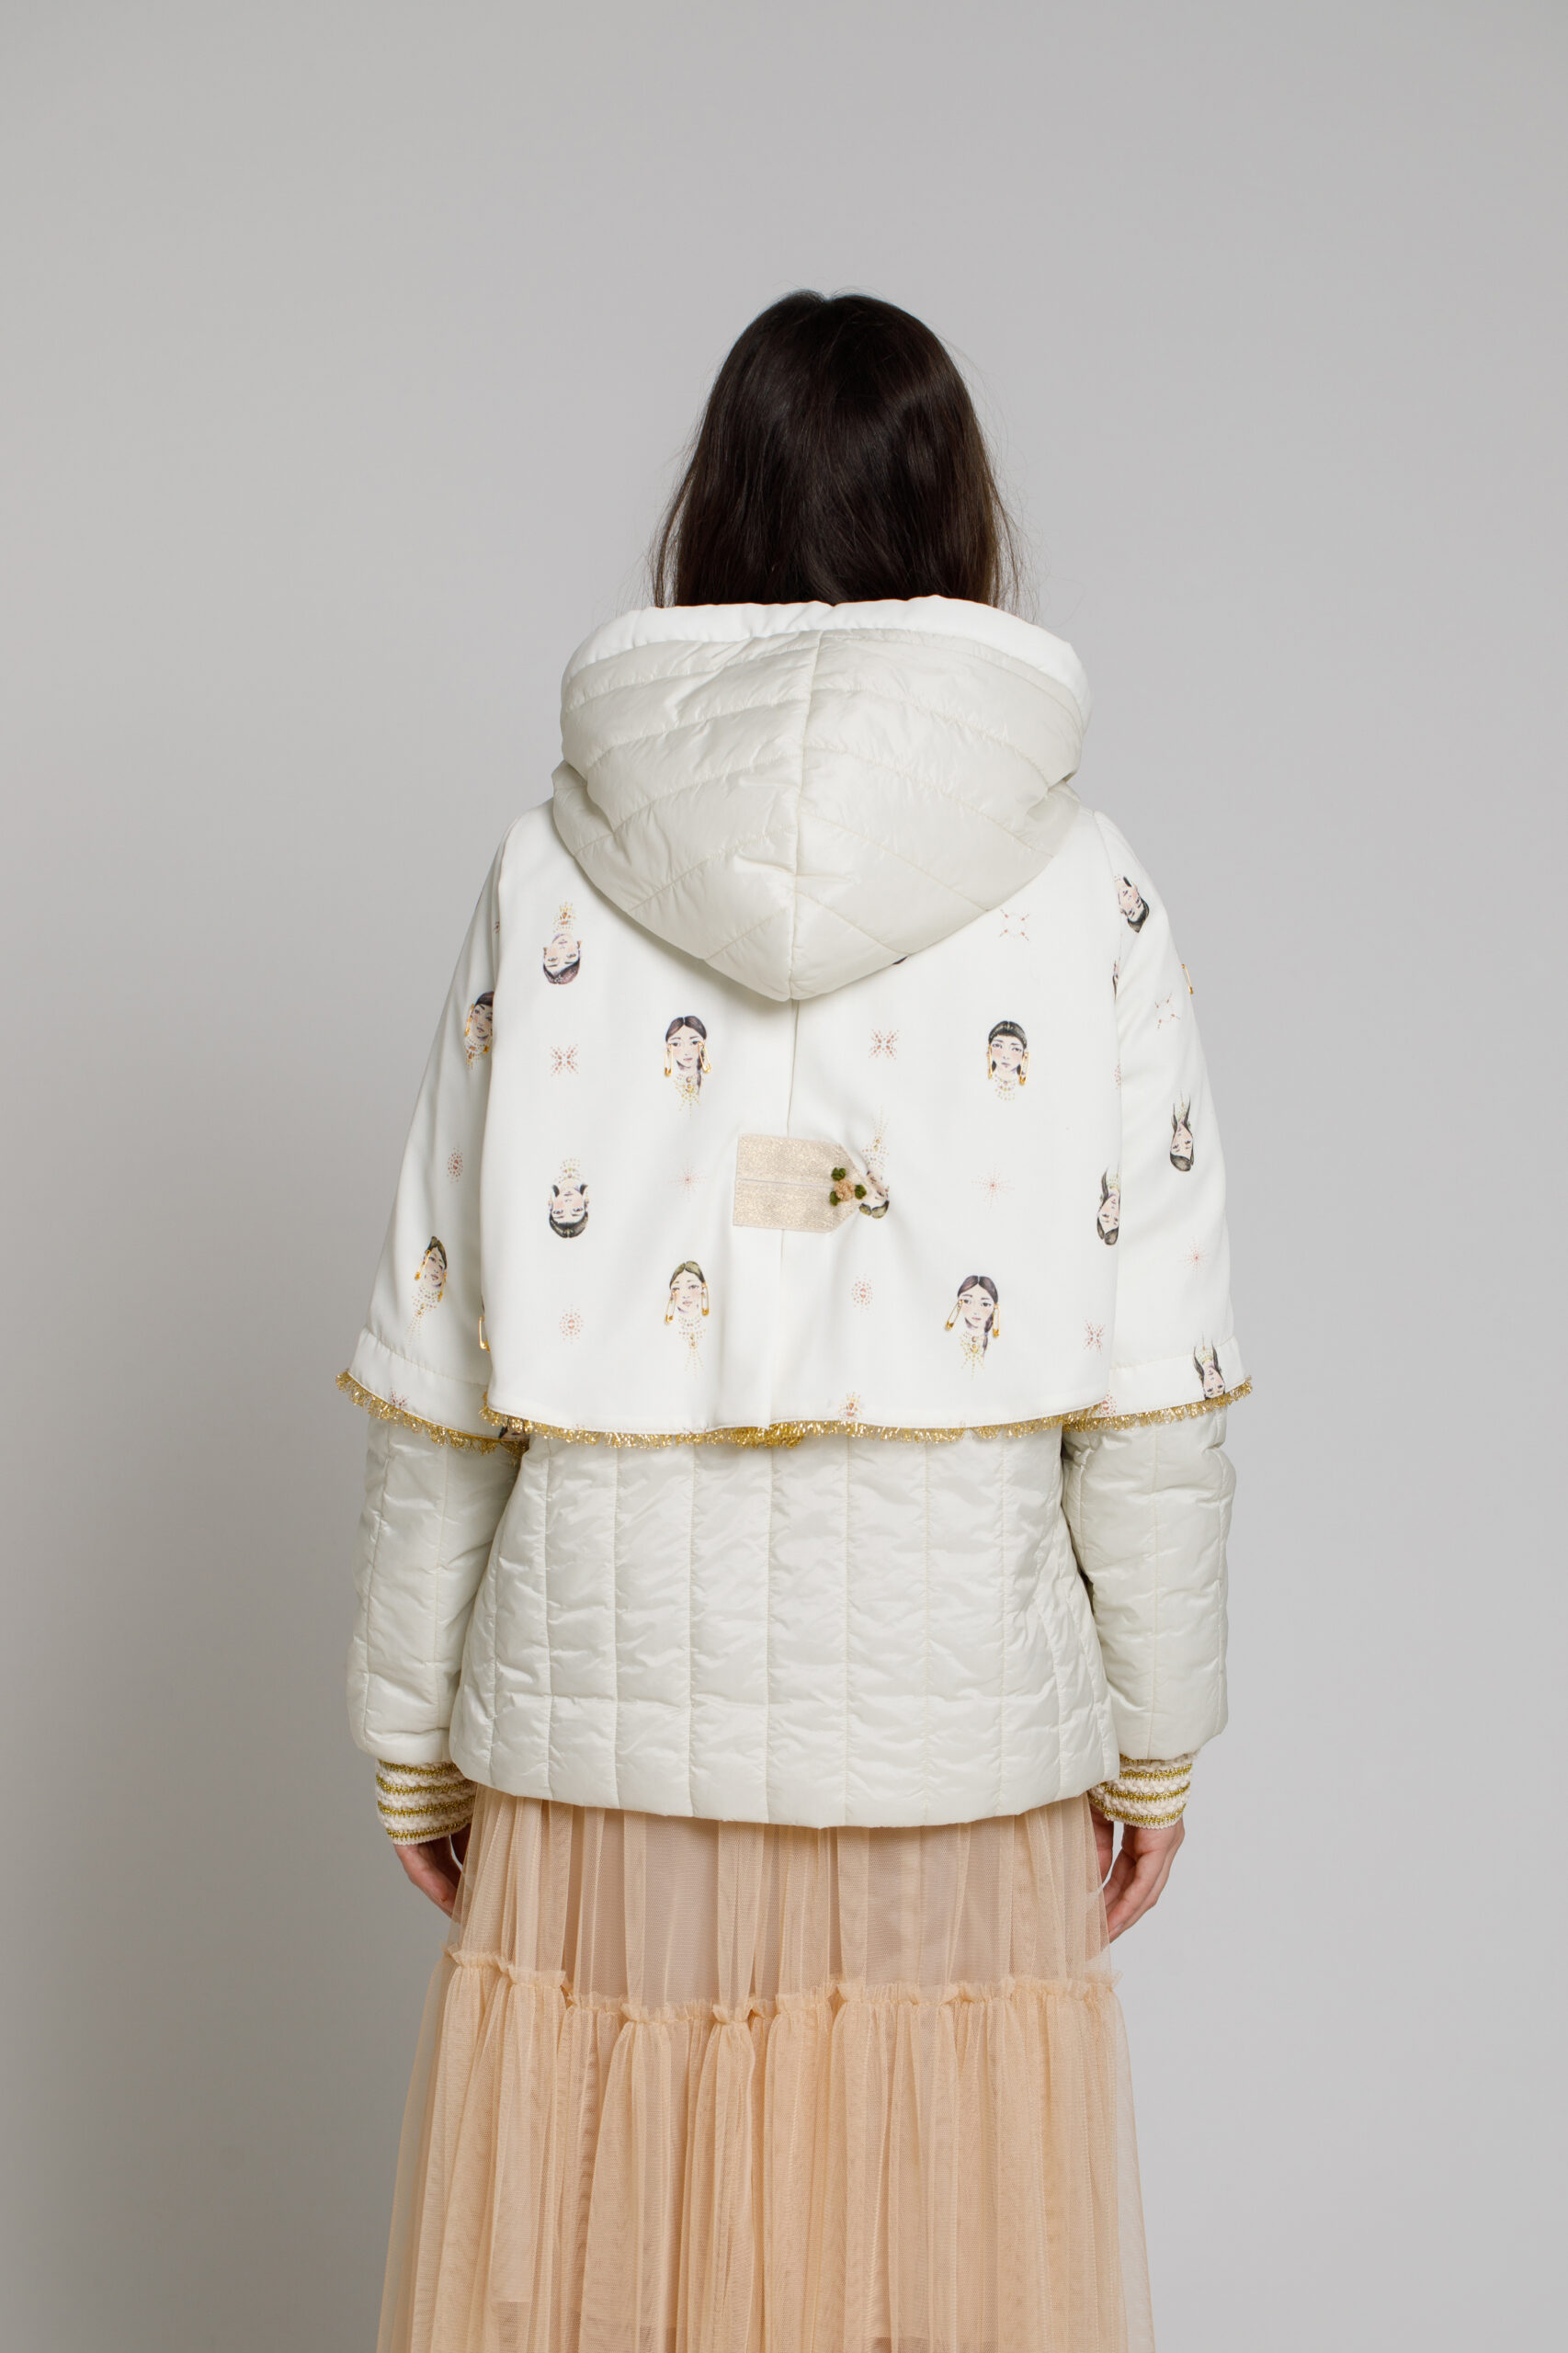 GALATEA cream quilted jacket. Natural fabrics, original design, handmade embroidery